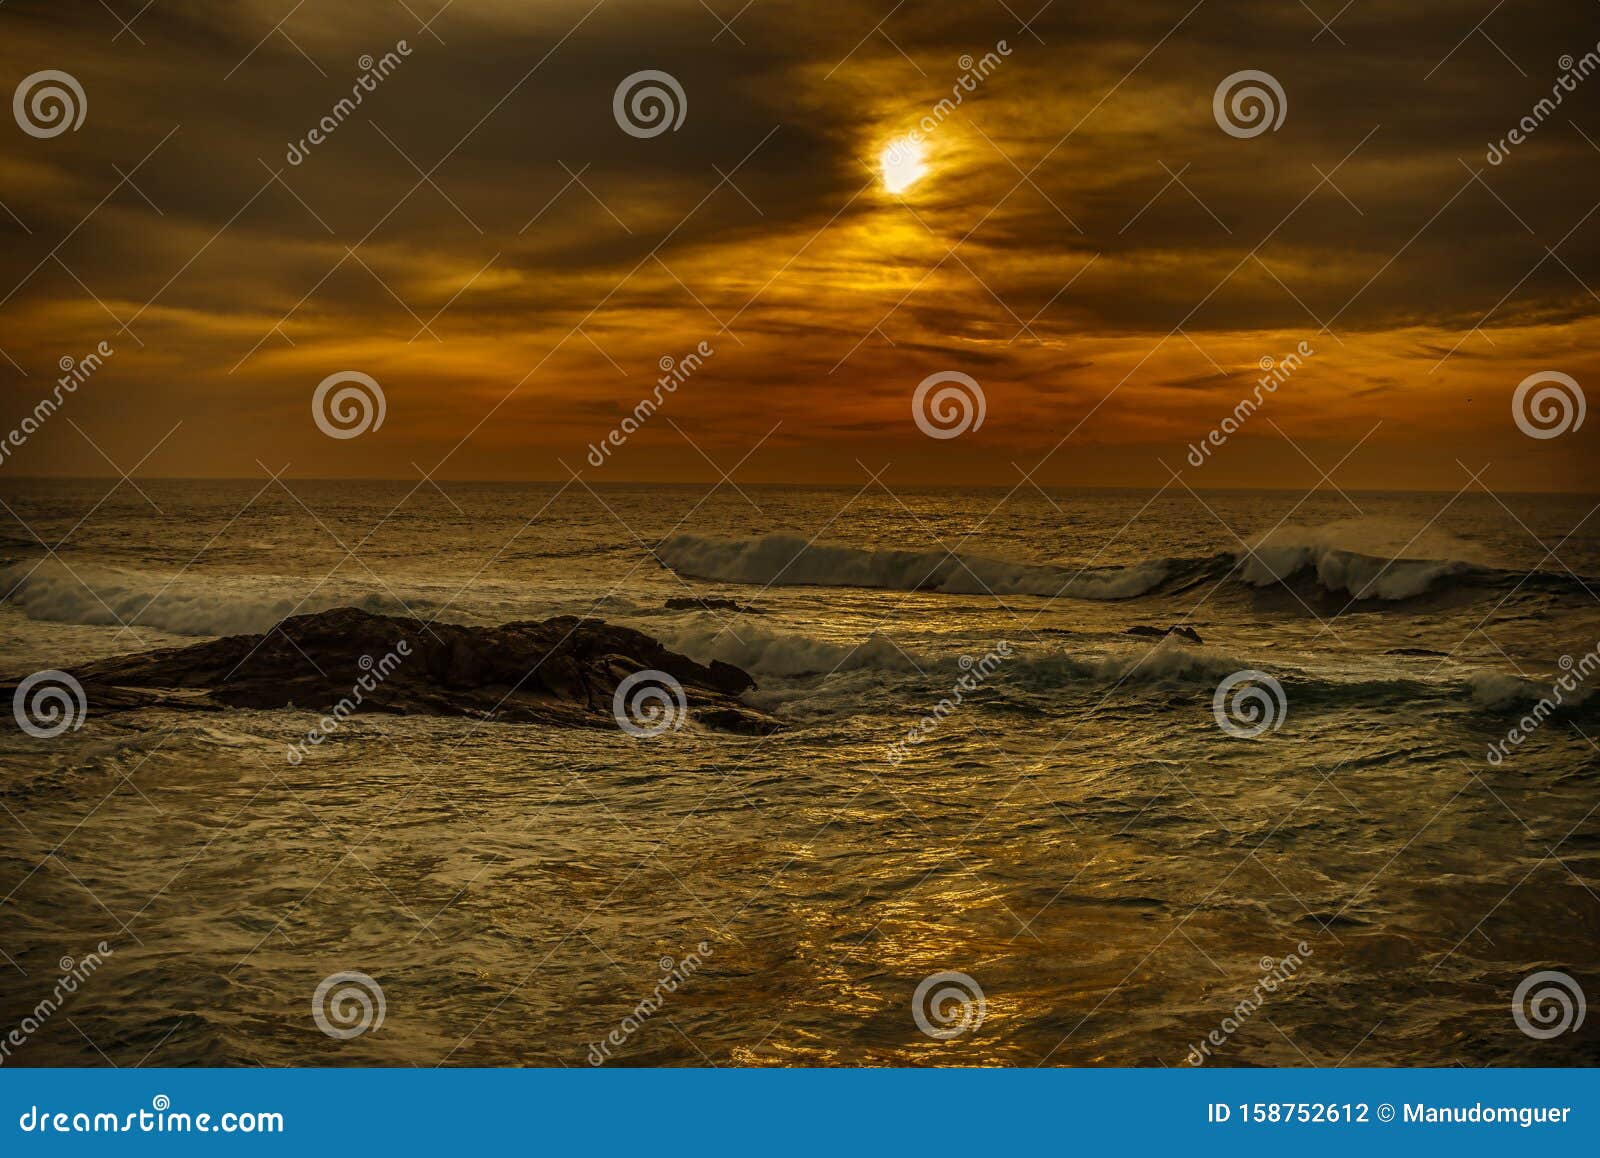 Dramatic Sky Stormy Sea At Night With Dramatic Sky Stock Photo Image